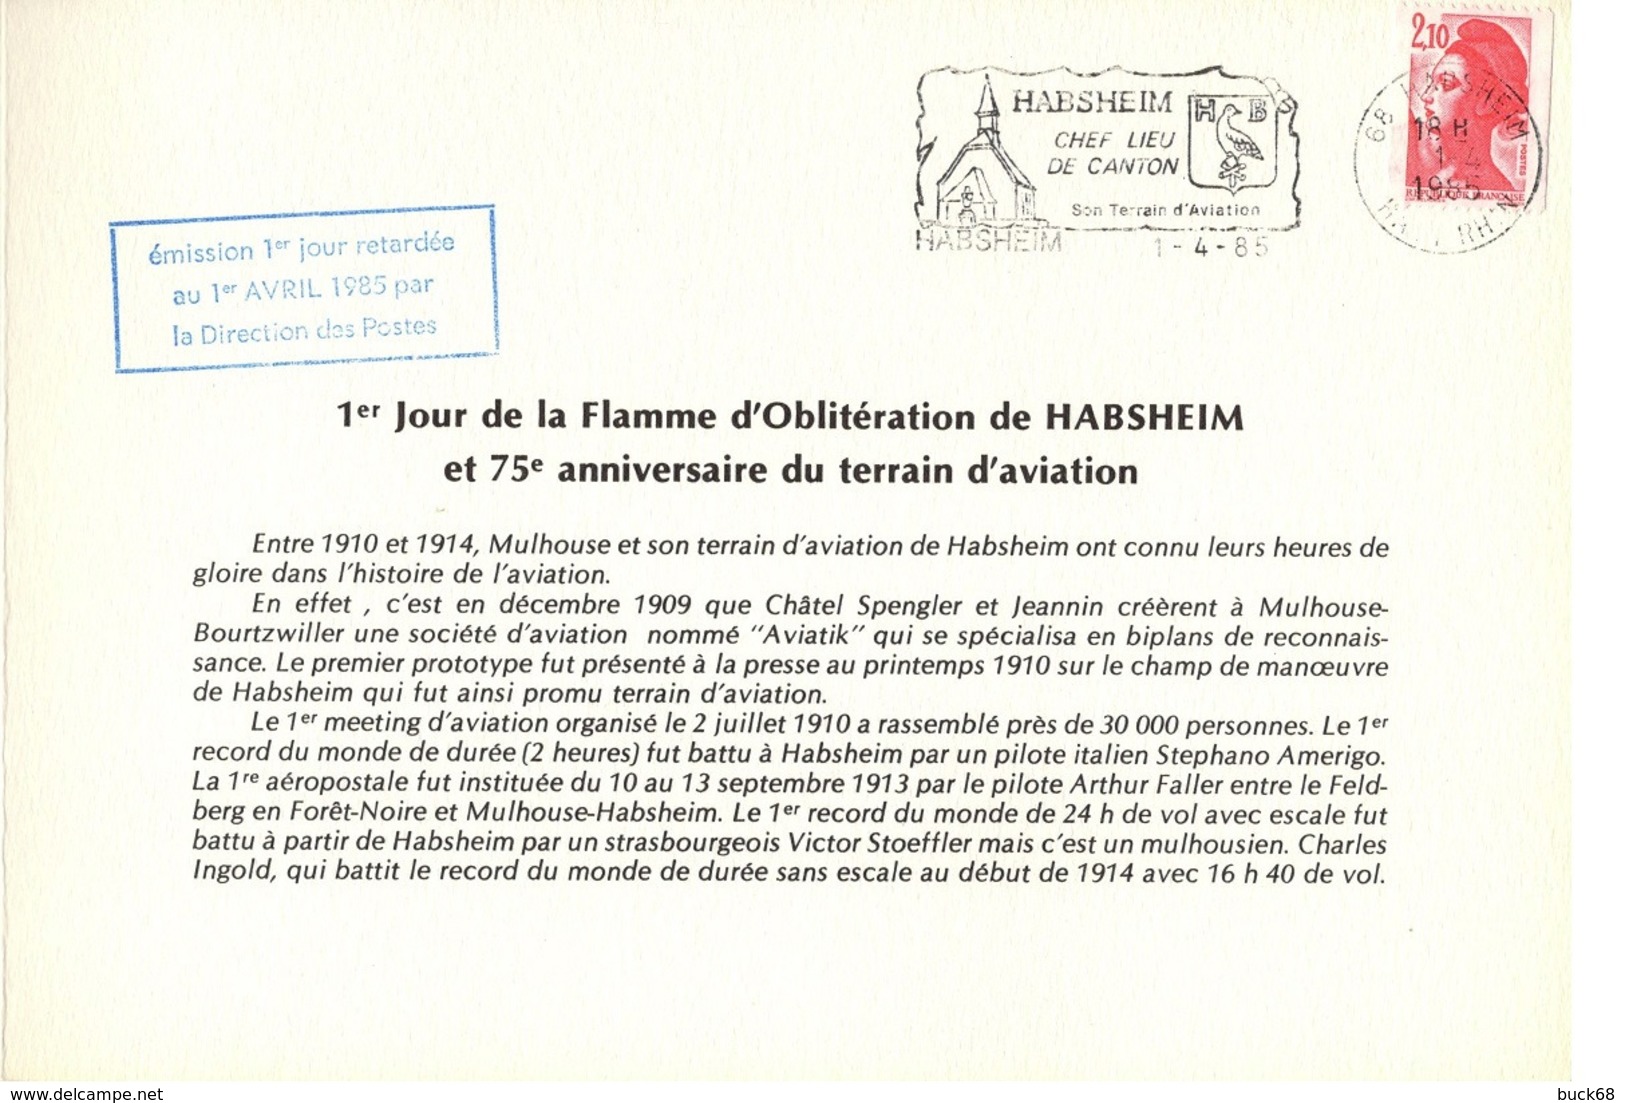 FRANCE 1985 Document Philatélique HABSHEIM Aviatik Pionniers Spengler Jeannin Biplan Reconnaissance 1910 (500 Ex) [GR] - Autres (Air)